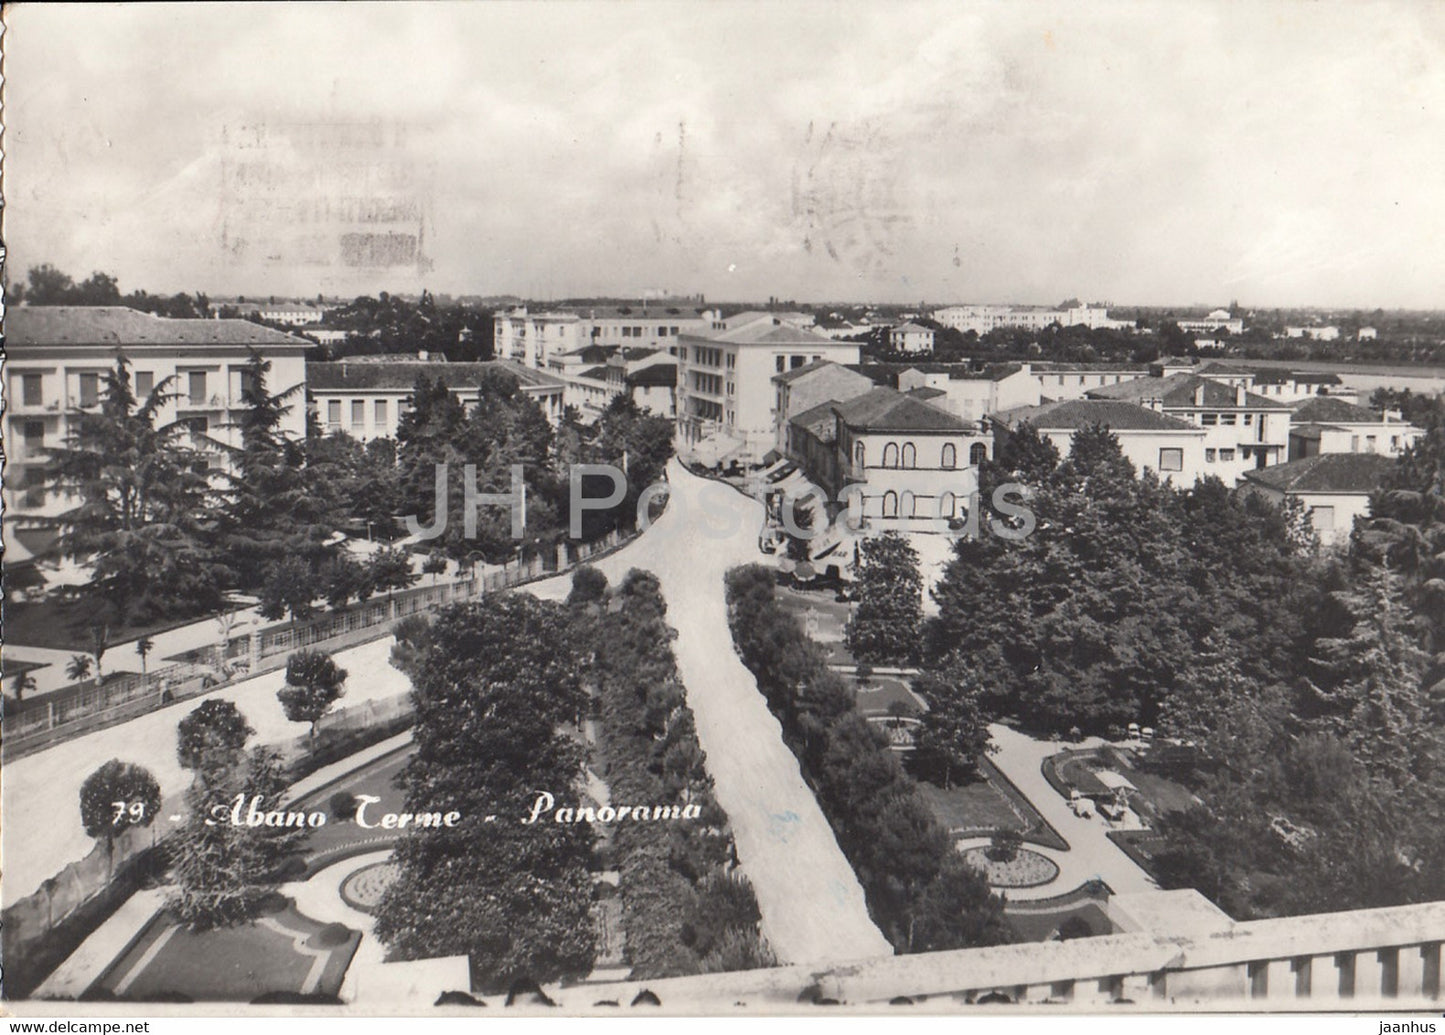 Abano Terme - Panorama - 79 - old postcard - 1957 - Italy - used - JH Postcards